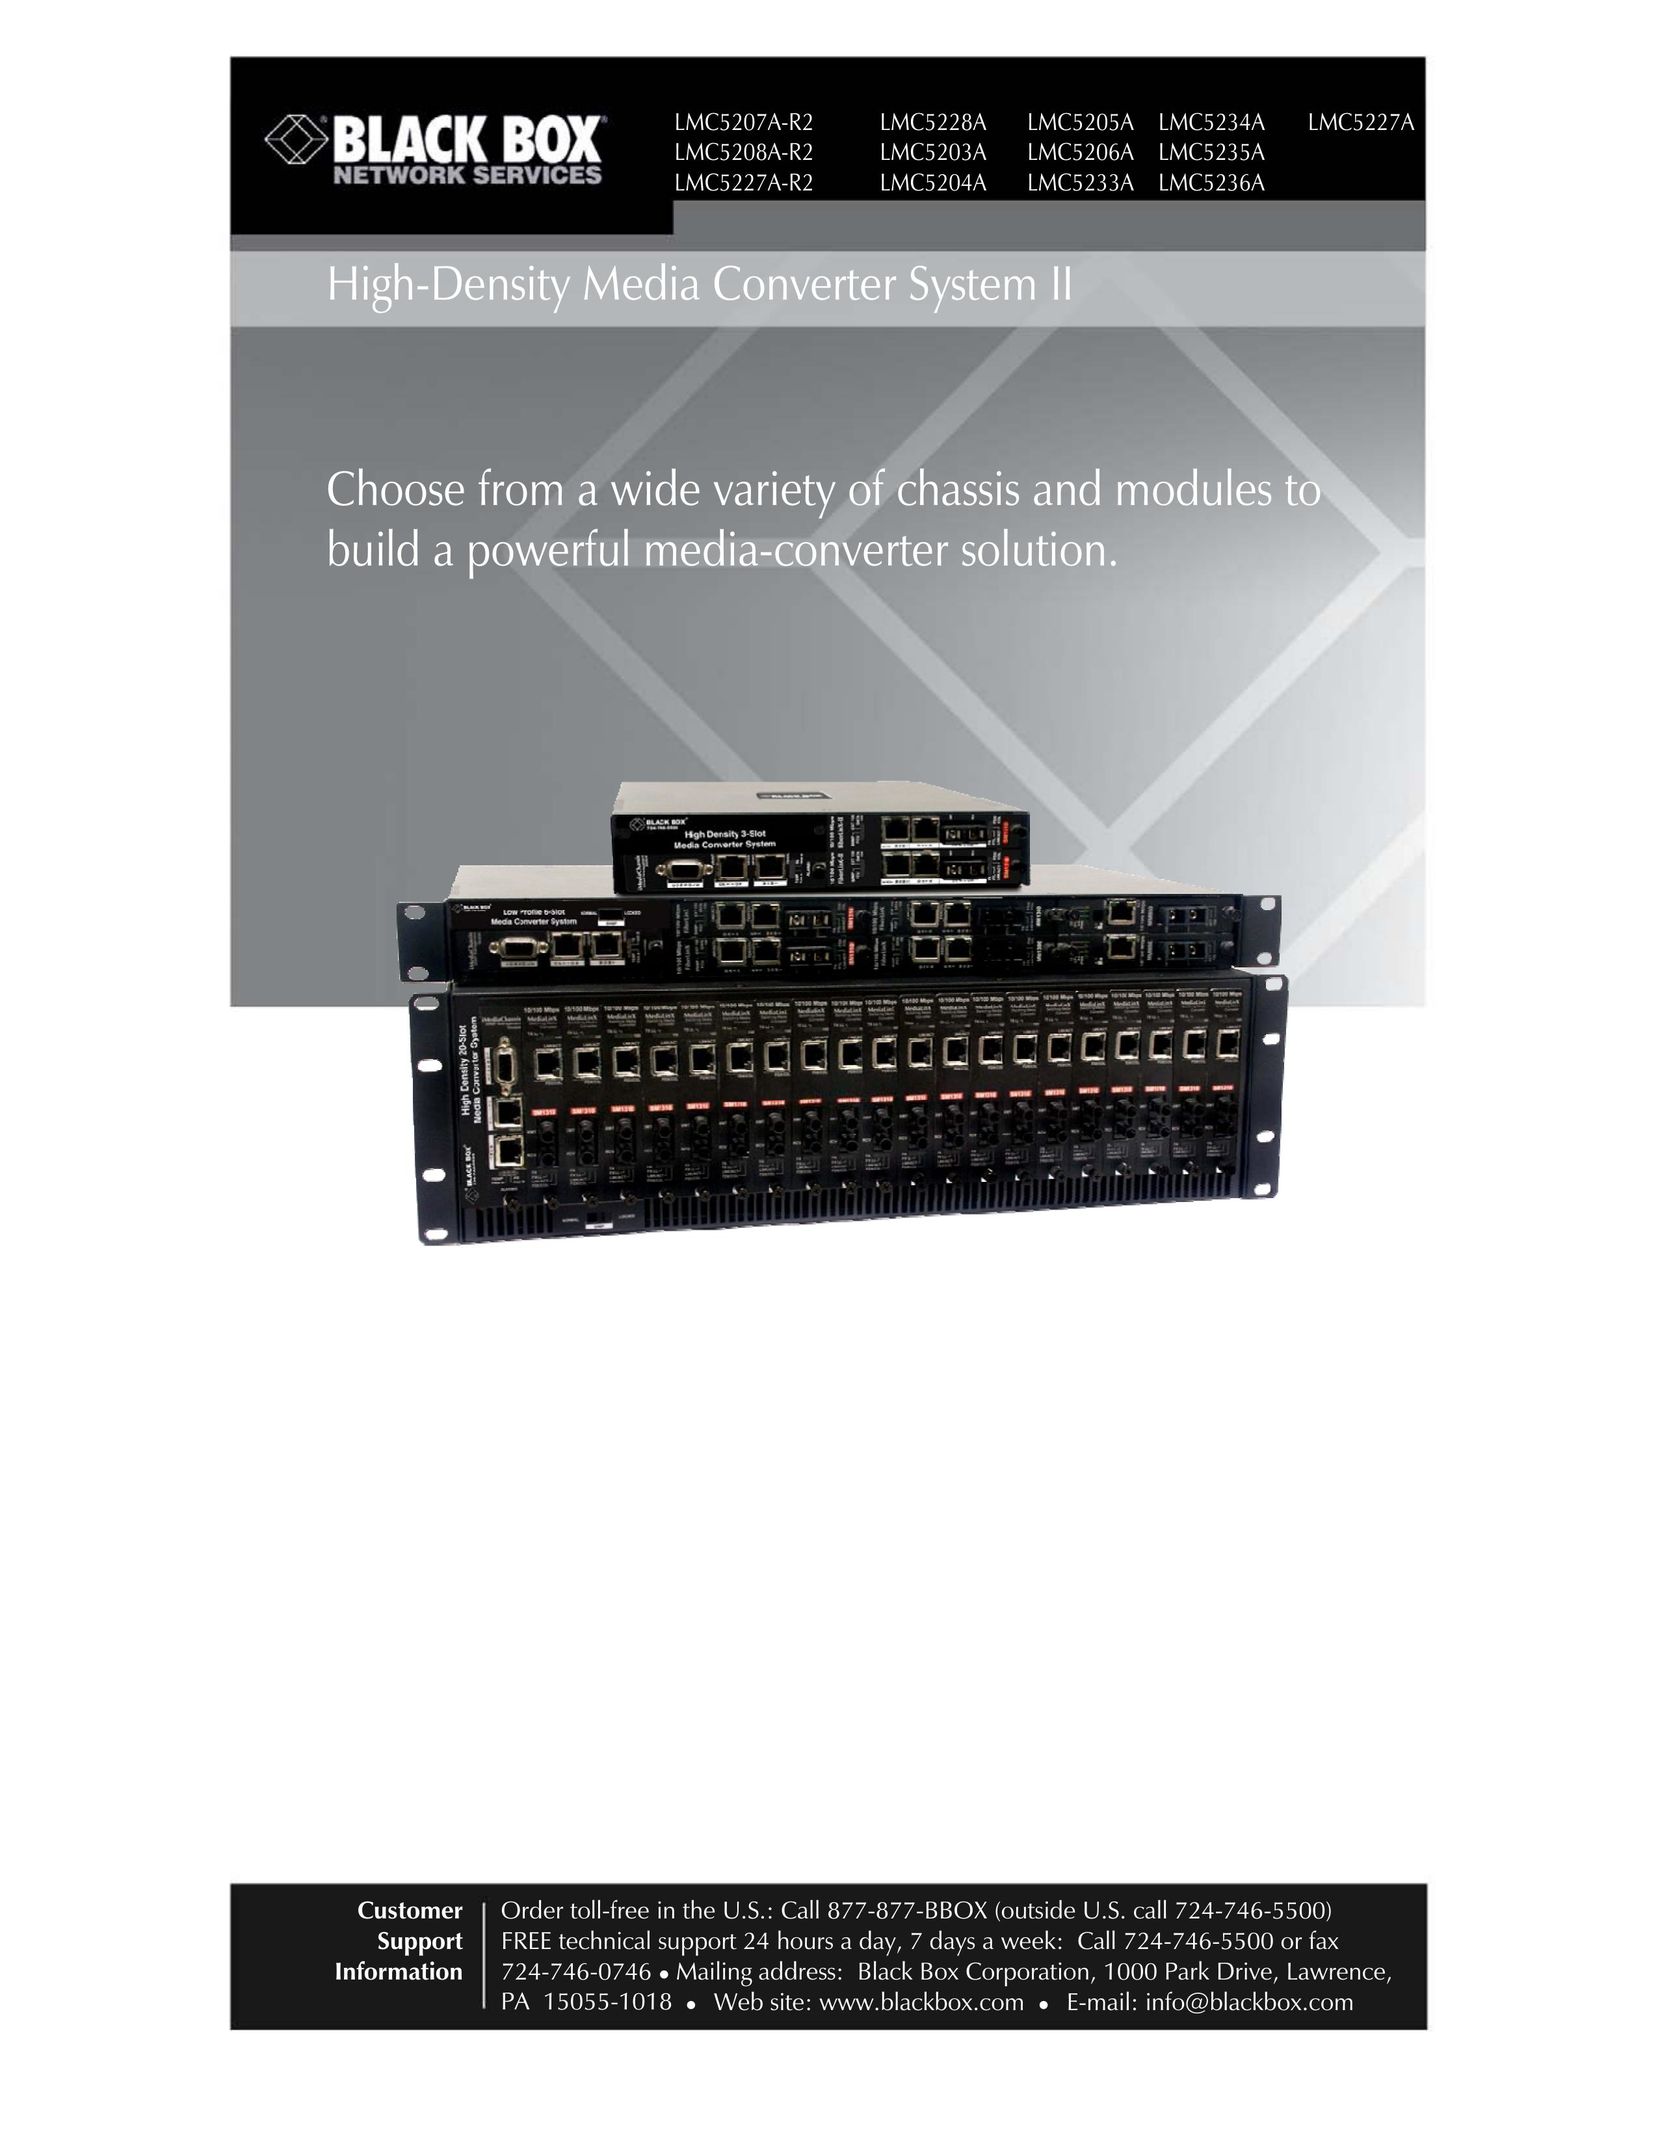 Black Box LMC5205A Portable Media Storage User Manual (Page 1)